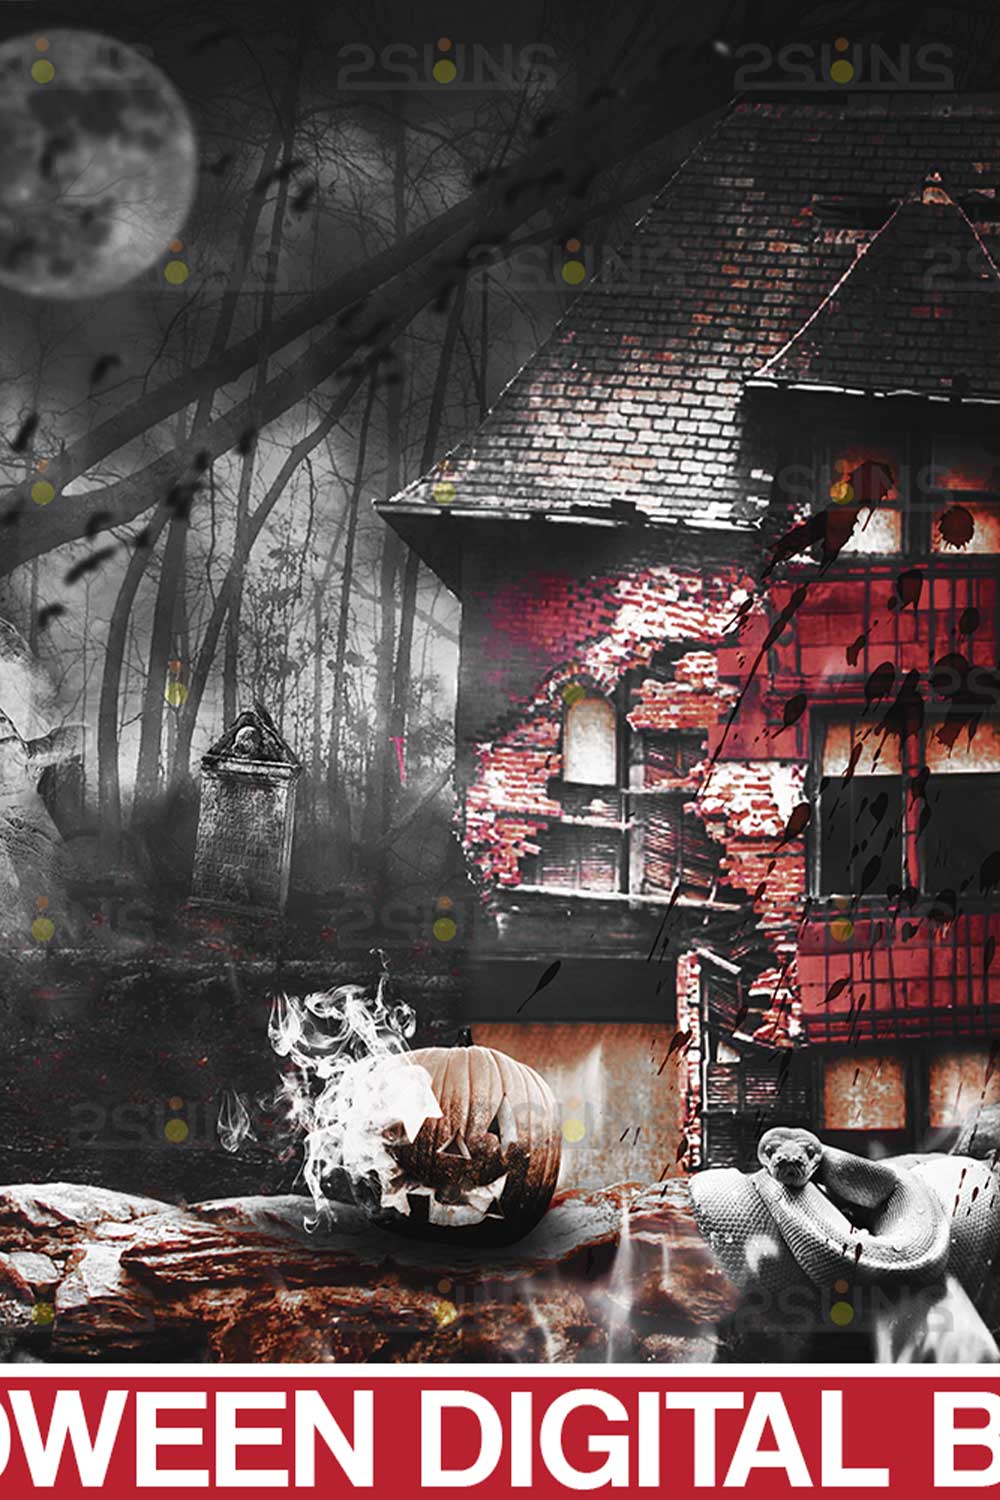 Scary Halloween Backdrop background Pinterest Image.